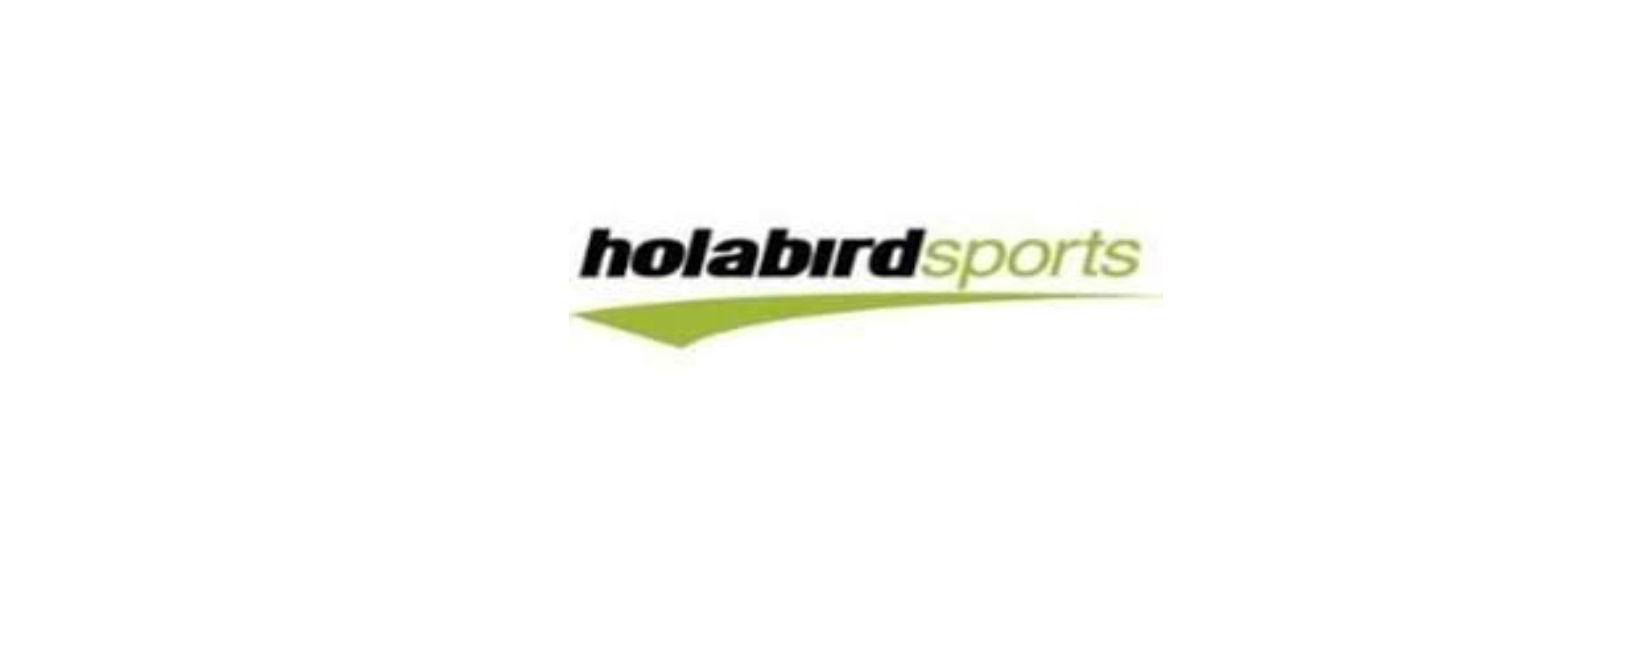 Holabird Sports Discount Code 2022